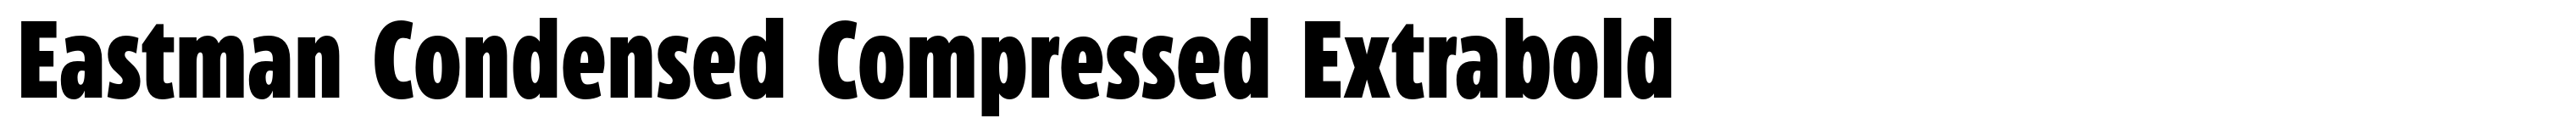 Eastman Condensed Compressed Extrabold